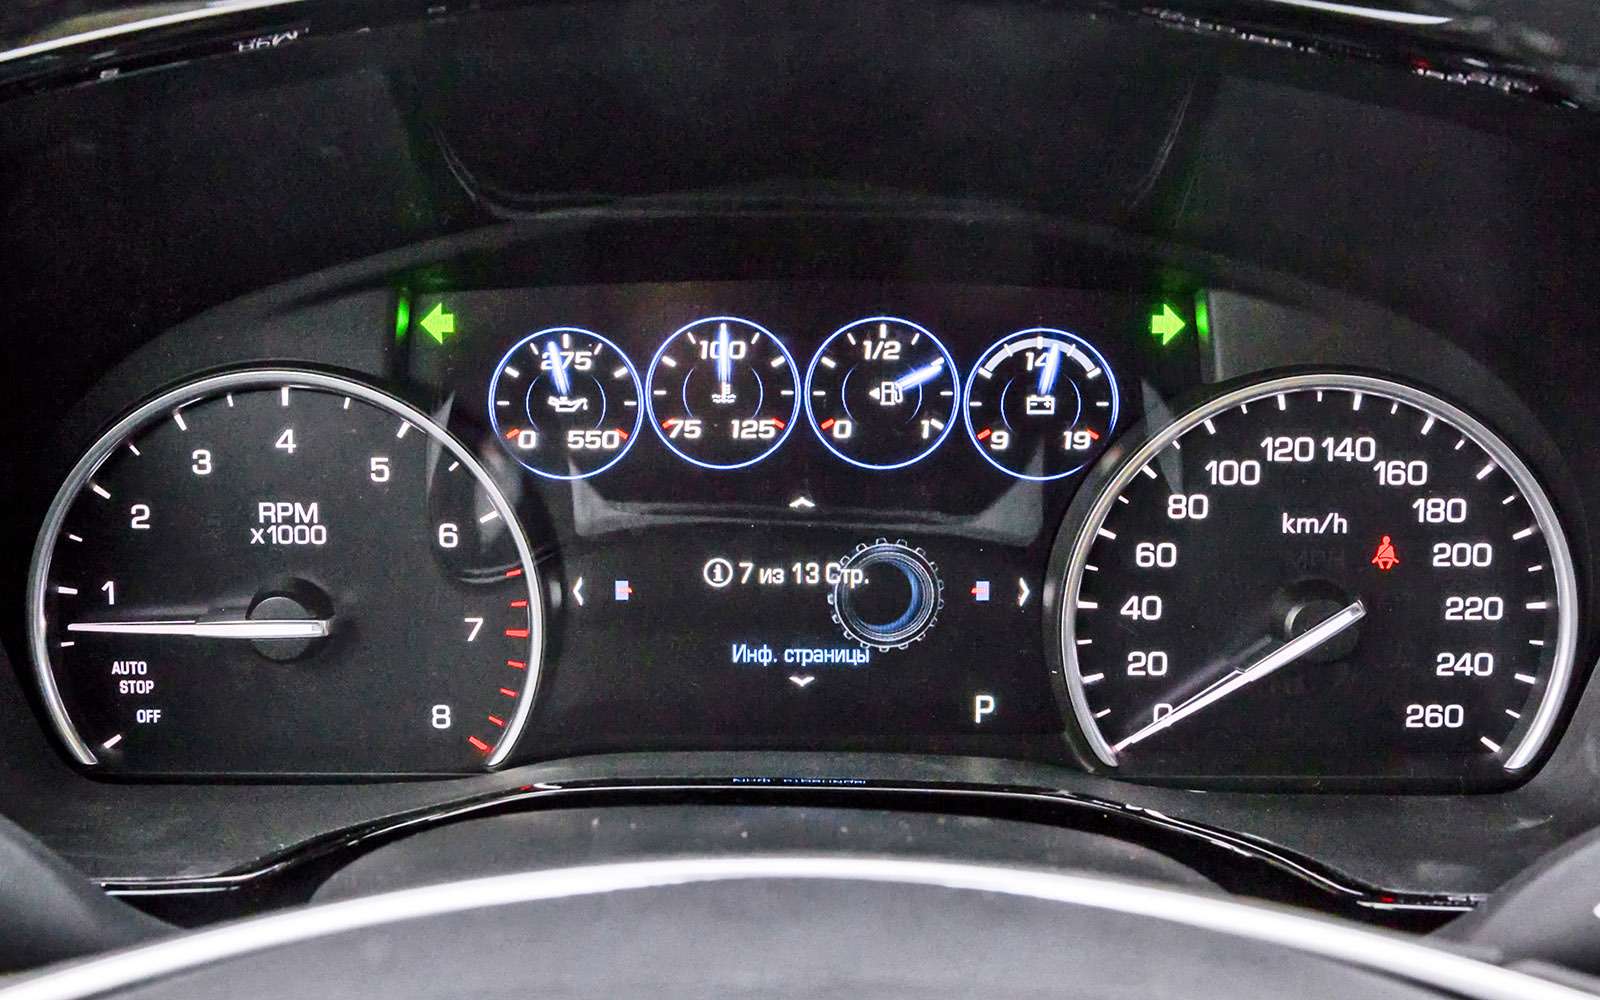 Тест премиум-кроссоверов: Lexus RX 350, Cadillac XT5 и Jaguar F-Pace — фото 721795